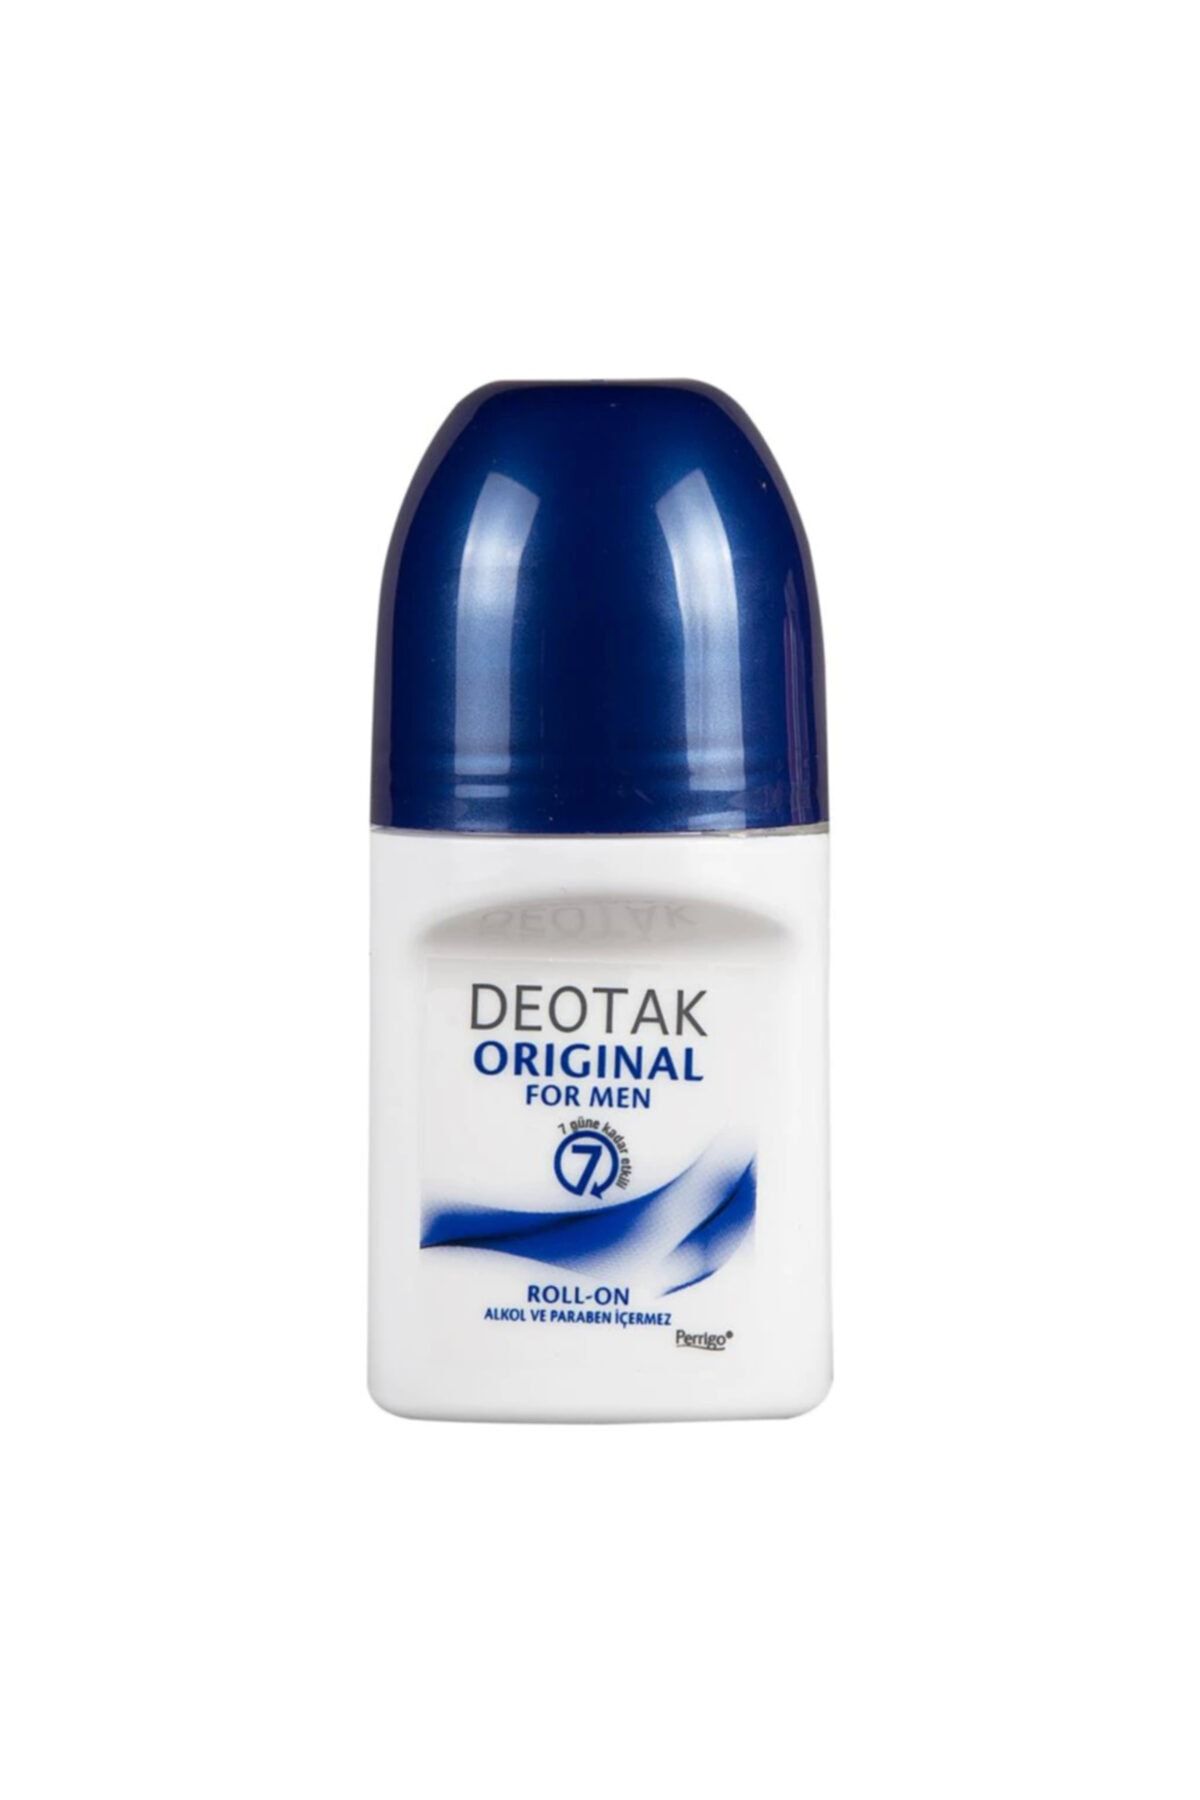 Deotak Original For Men Roll-on Deodorant 35 ml